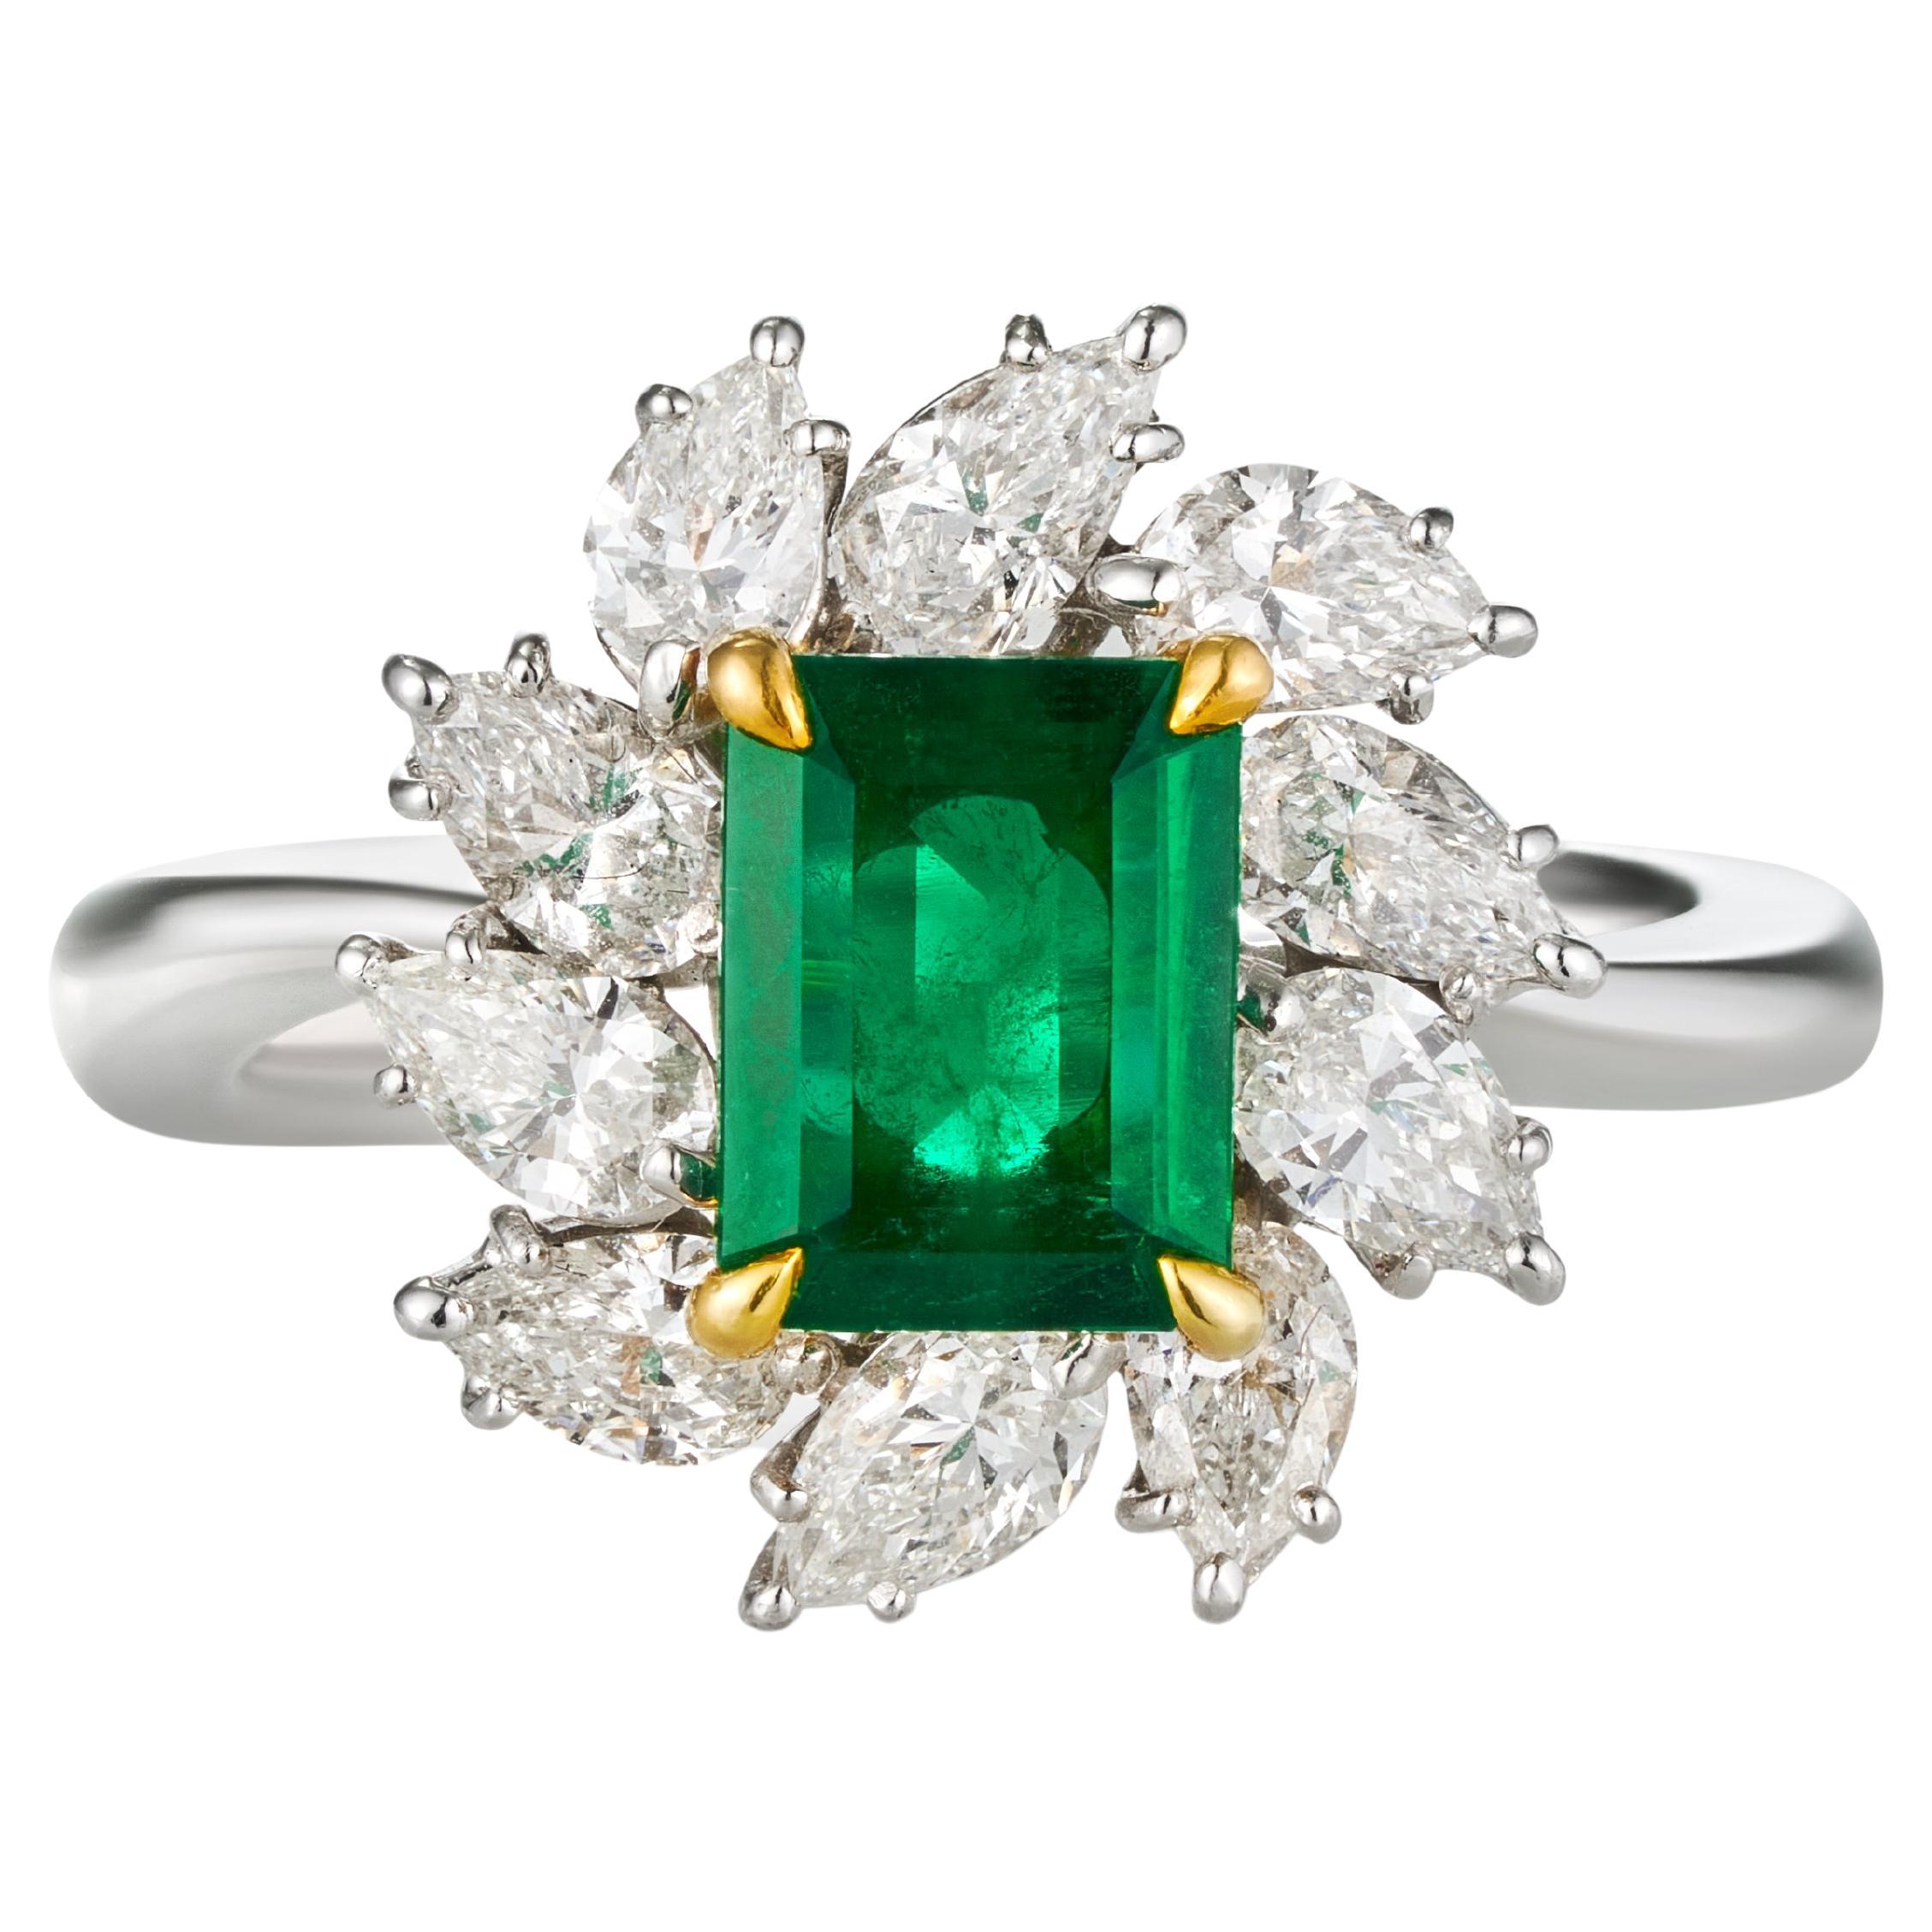 GRS Certified Natural Rare Afghan Emerald Diamond Ring - Vivid Green (bague en diamant avec émeraude afghane certifiée GRS) 